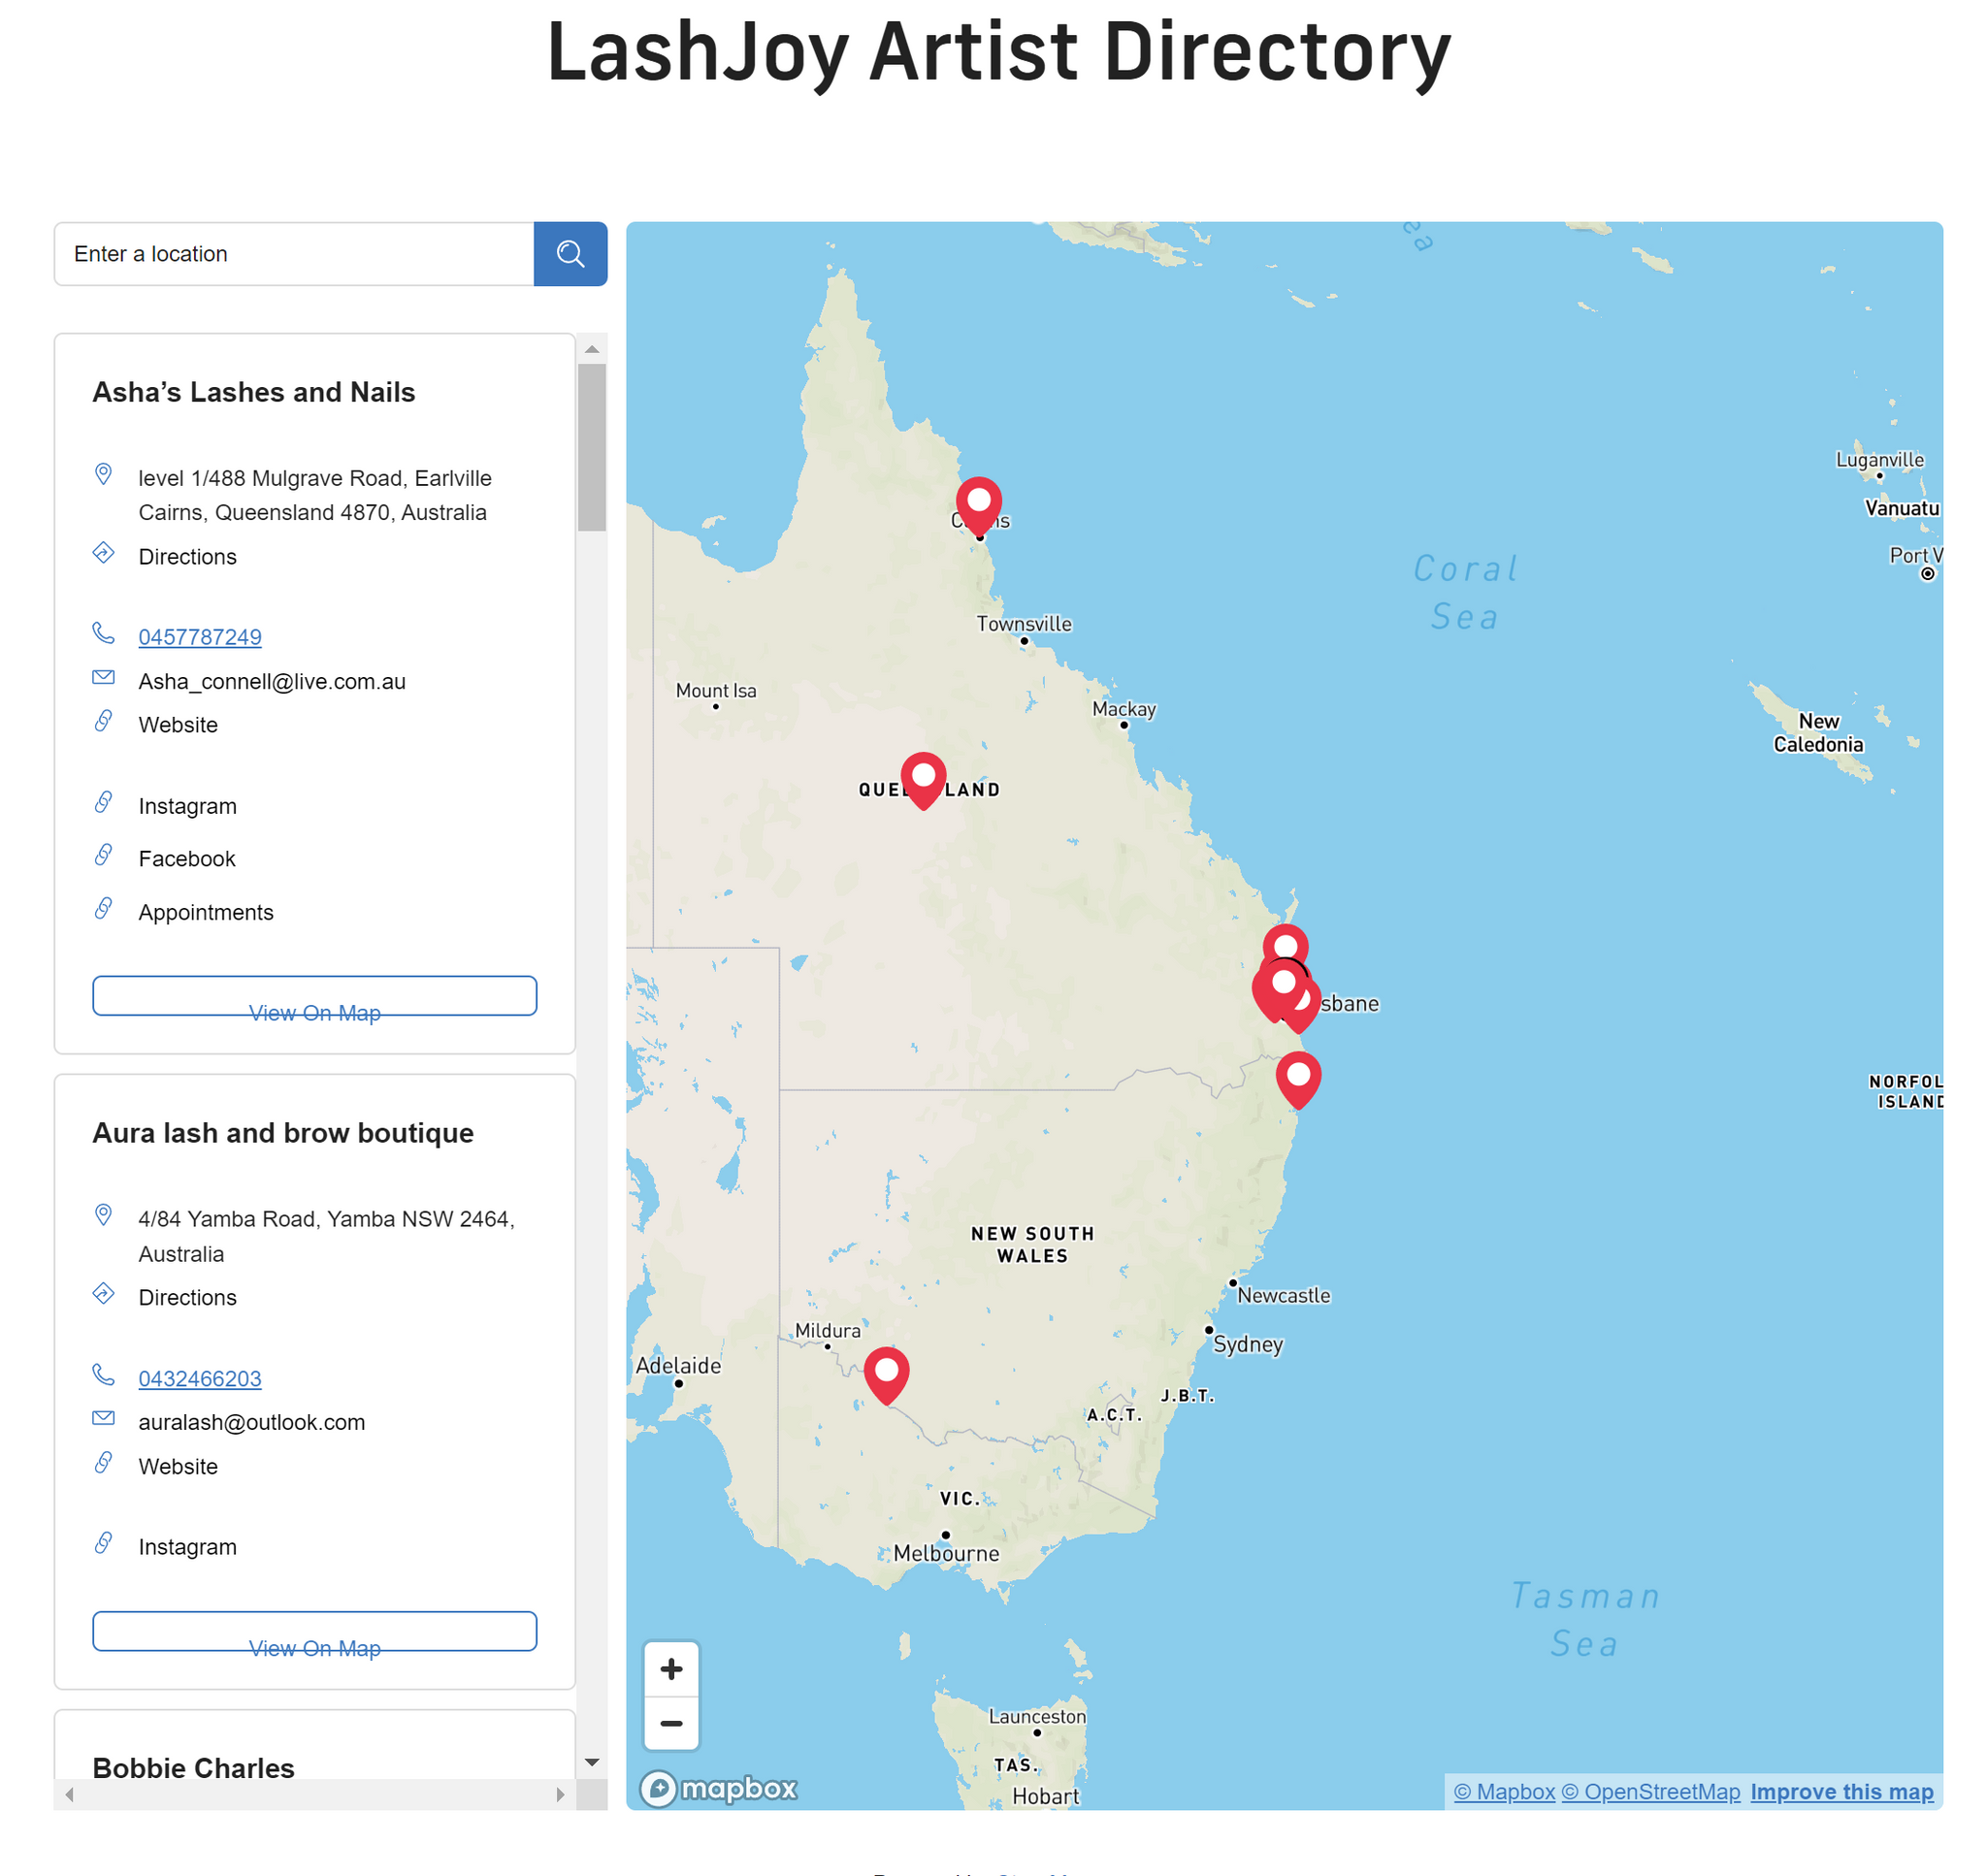 Introducing the LashJoy Artist Online Directory